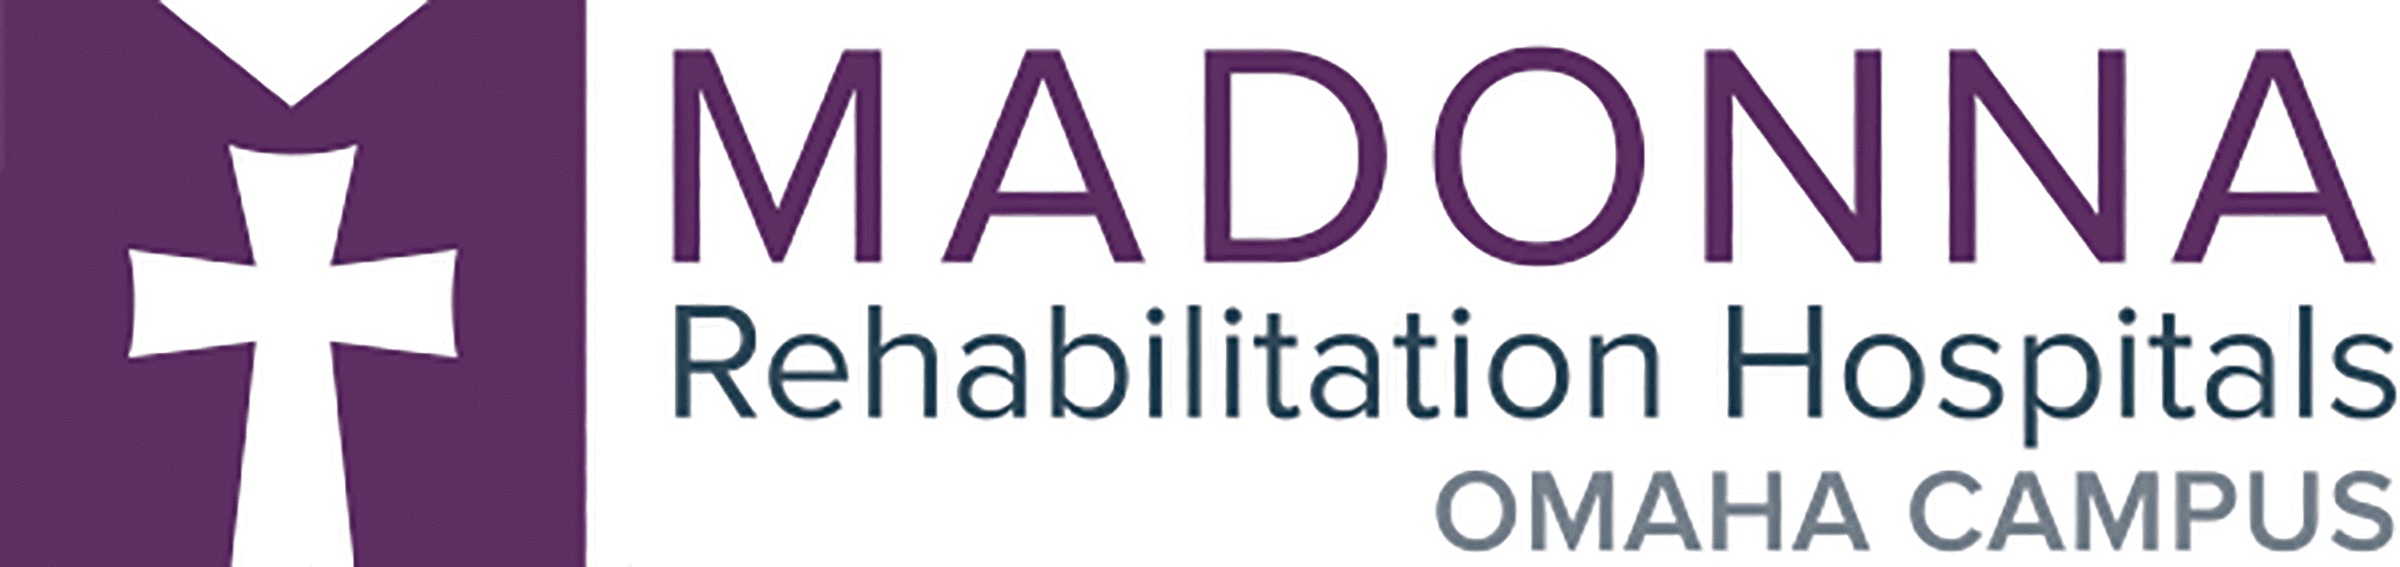 Madonna Rehabilitation Hospital logo